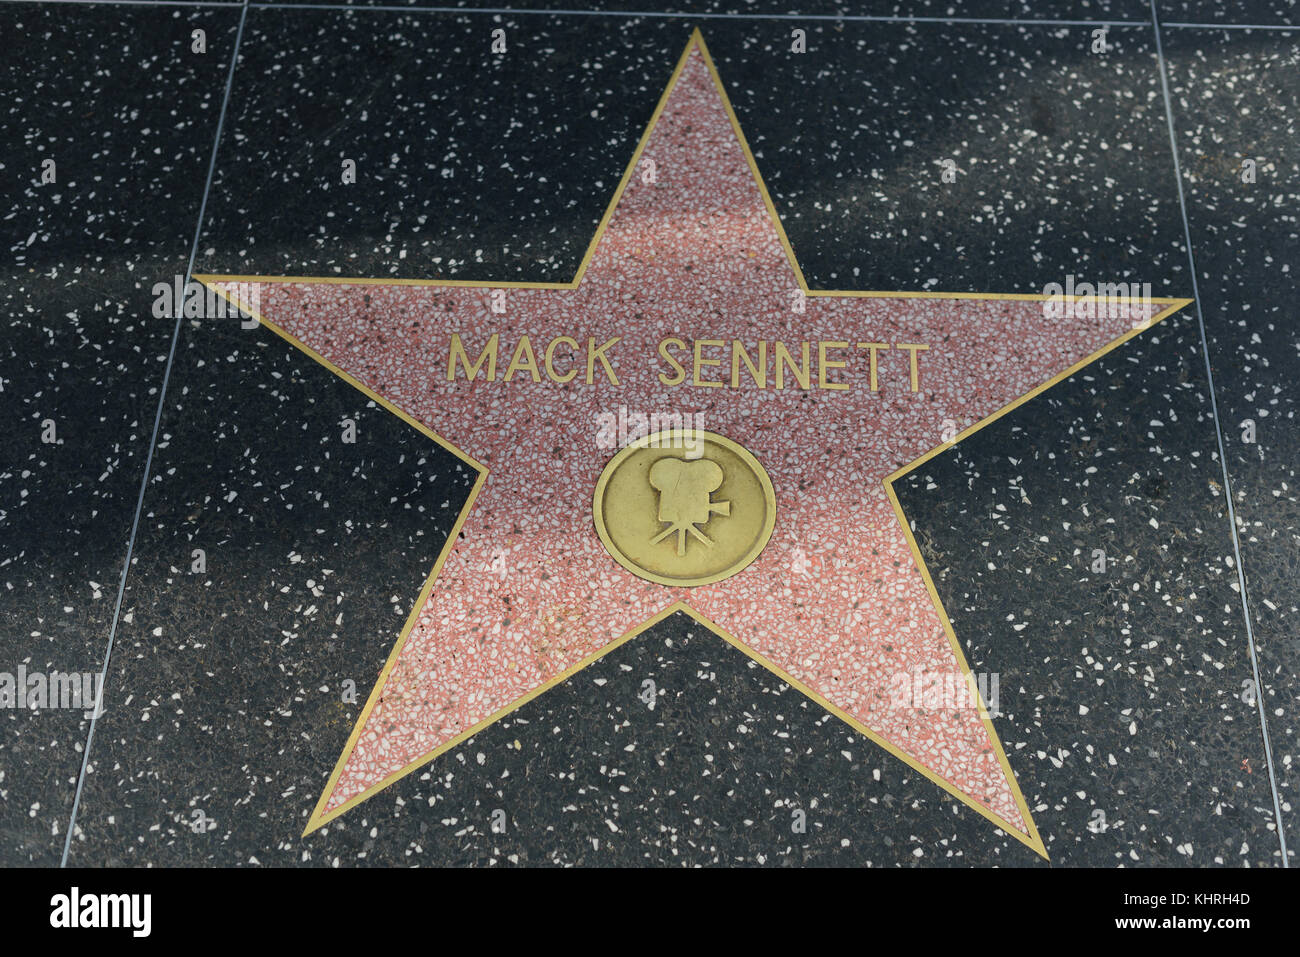 HOLLYWOOD, CA - DECEMBER 06: Mack Sennett star on the Hollywood Walk of Fame in Hollywood, California on Dec. 6, 2016. Stock Photo